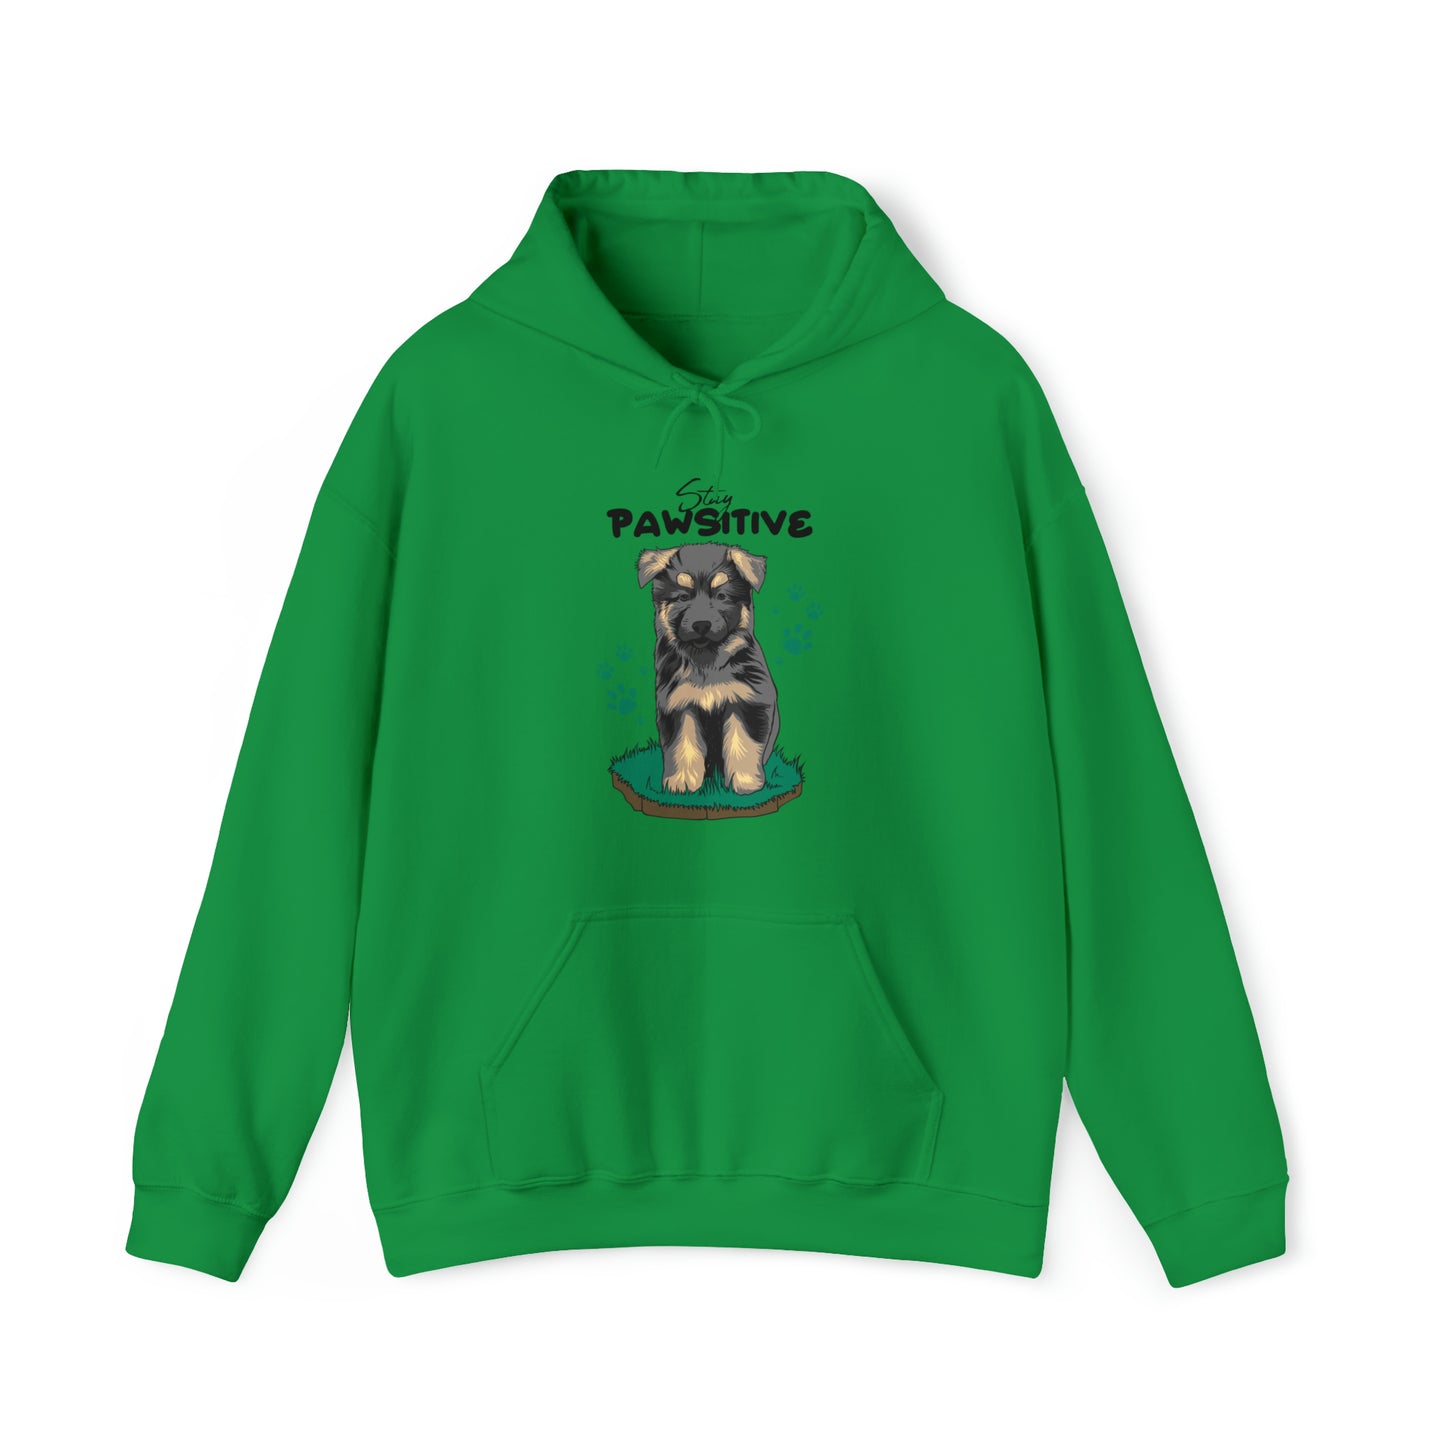 Custom Parody Hooded Sweatshirt, Stay PAWSITIVE design